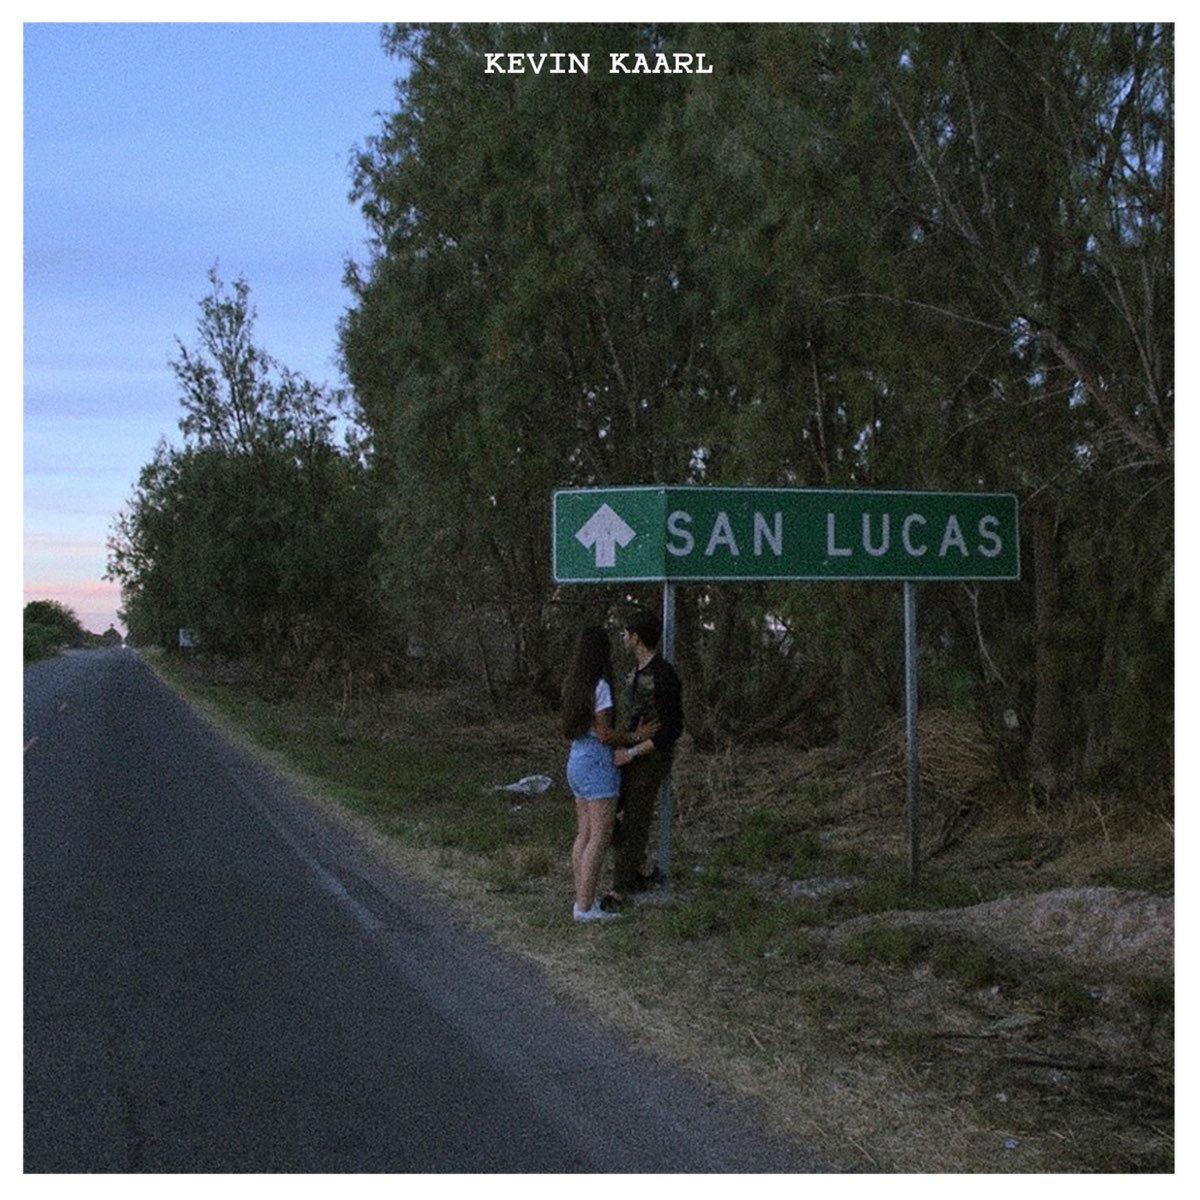 ‎San Lucas - Álbum de Kevin Kaarl - Apple Music